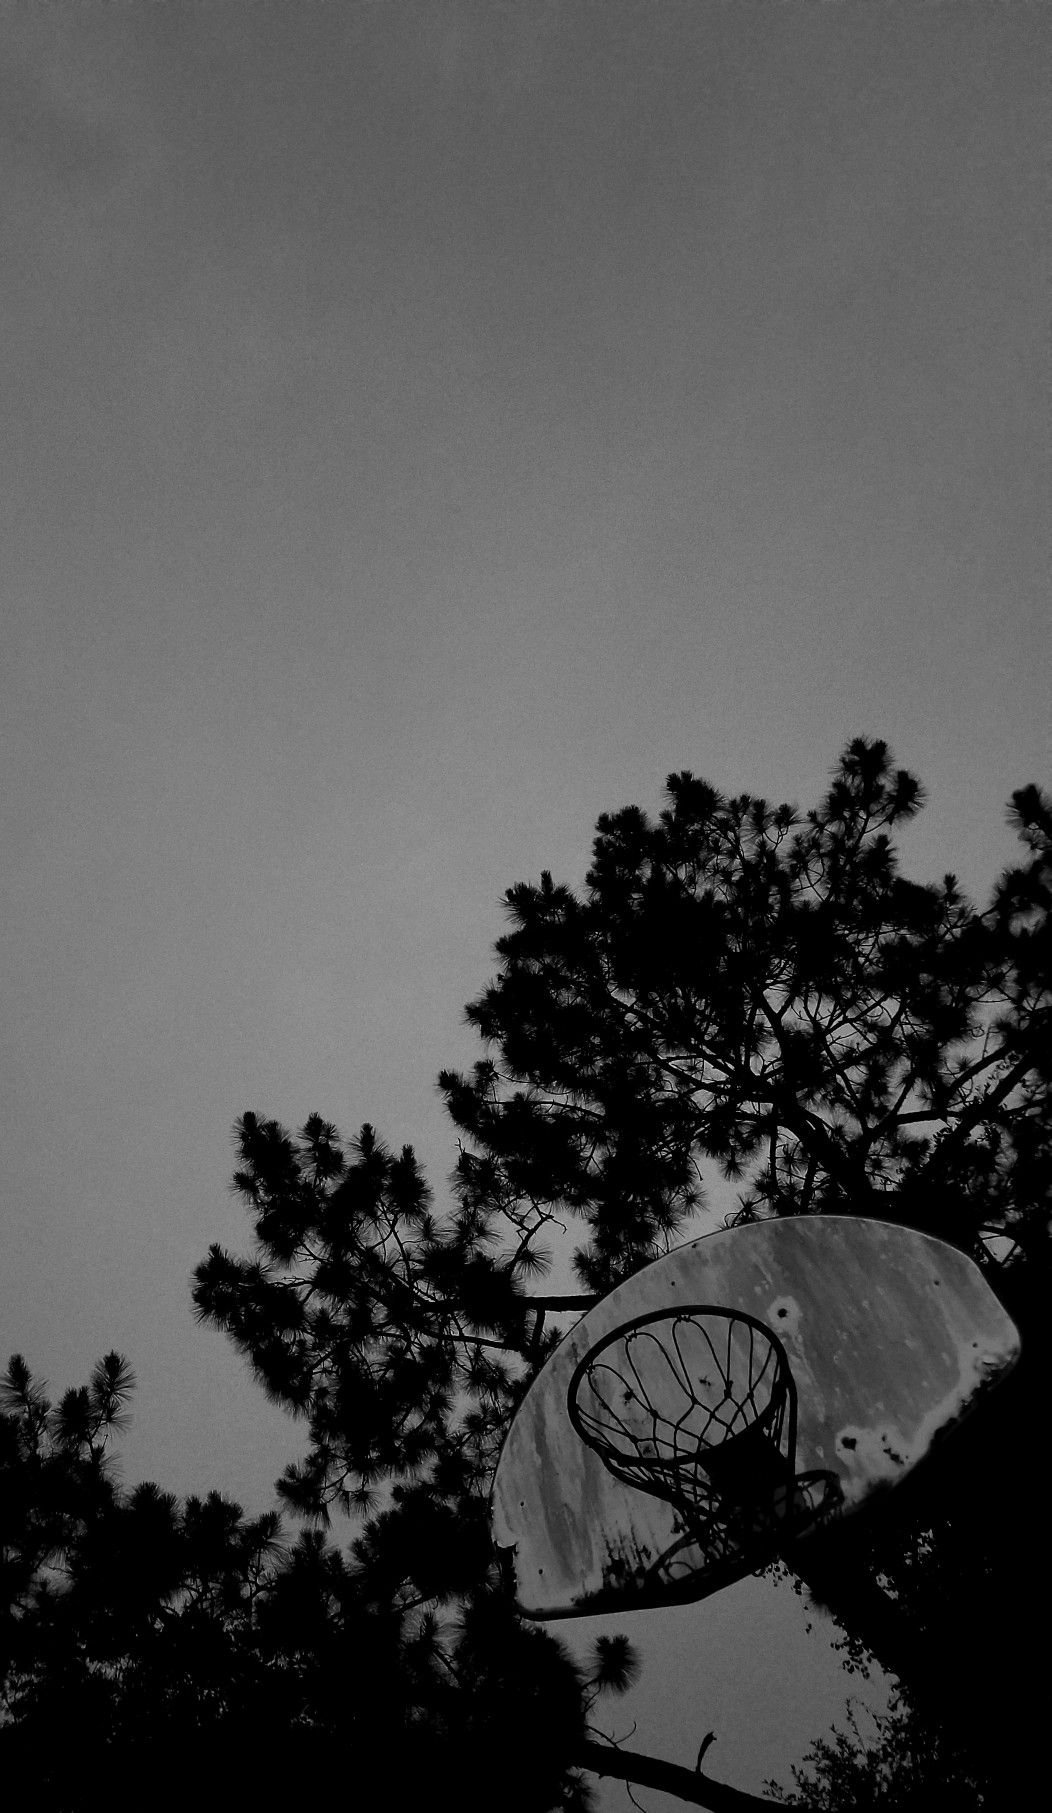 22+] Basketball Black and White Wallpapers - WallpaperSafari